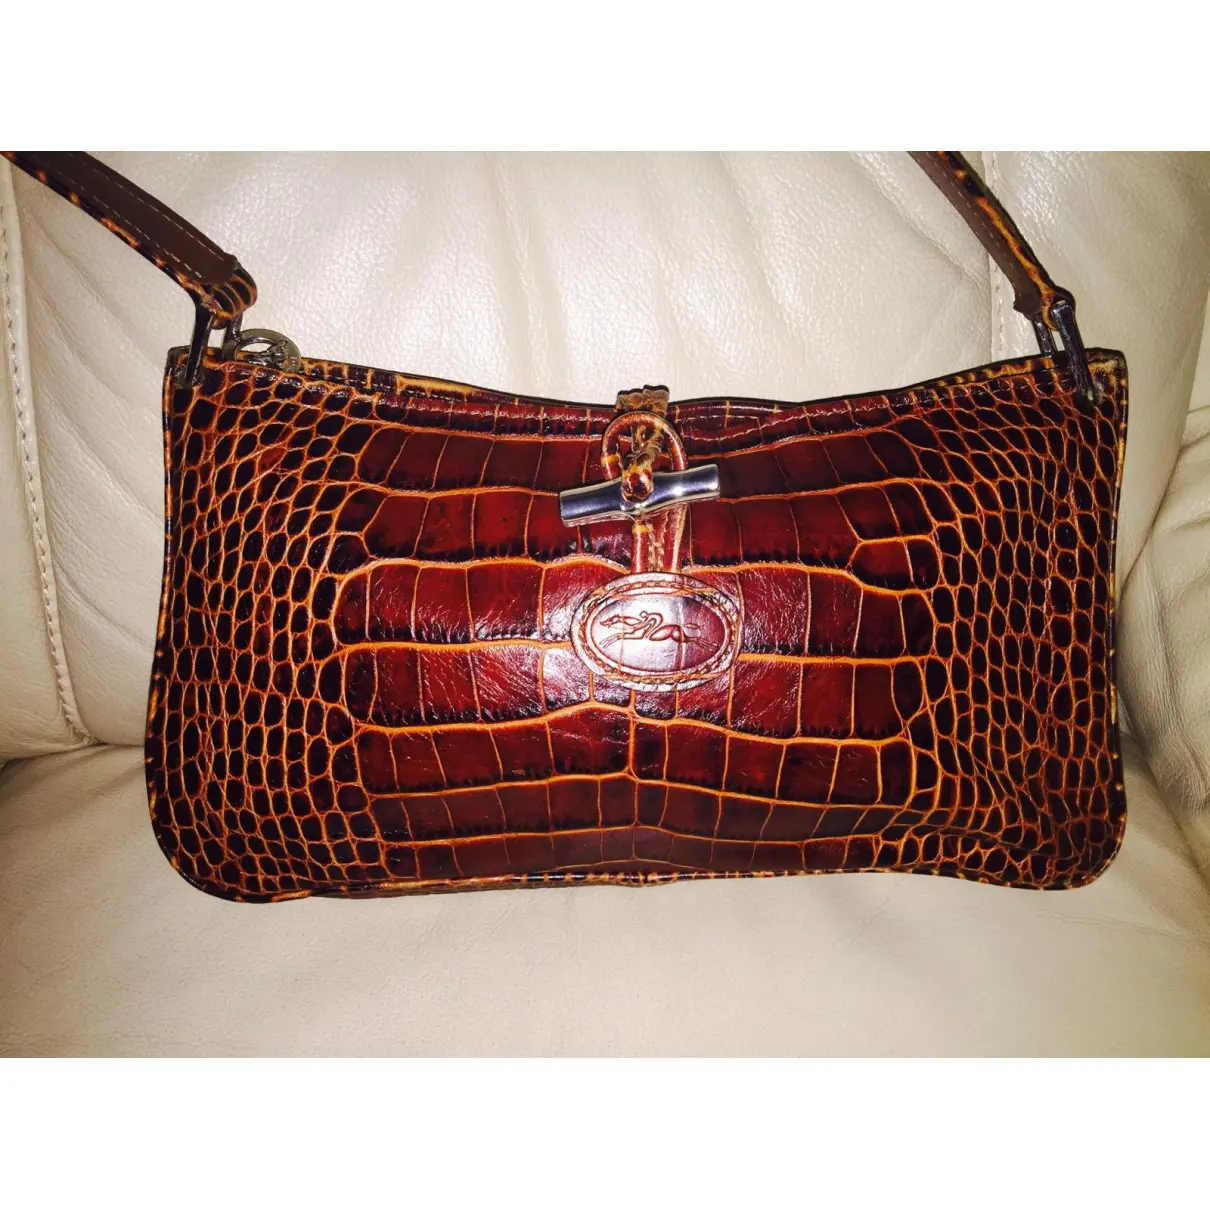 Longchamp Exotic leathers handbag for sale